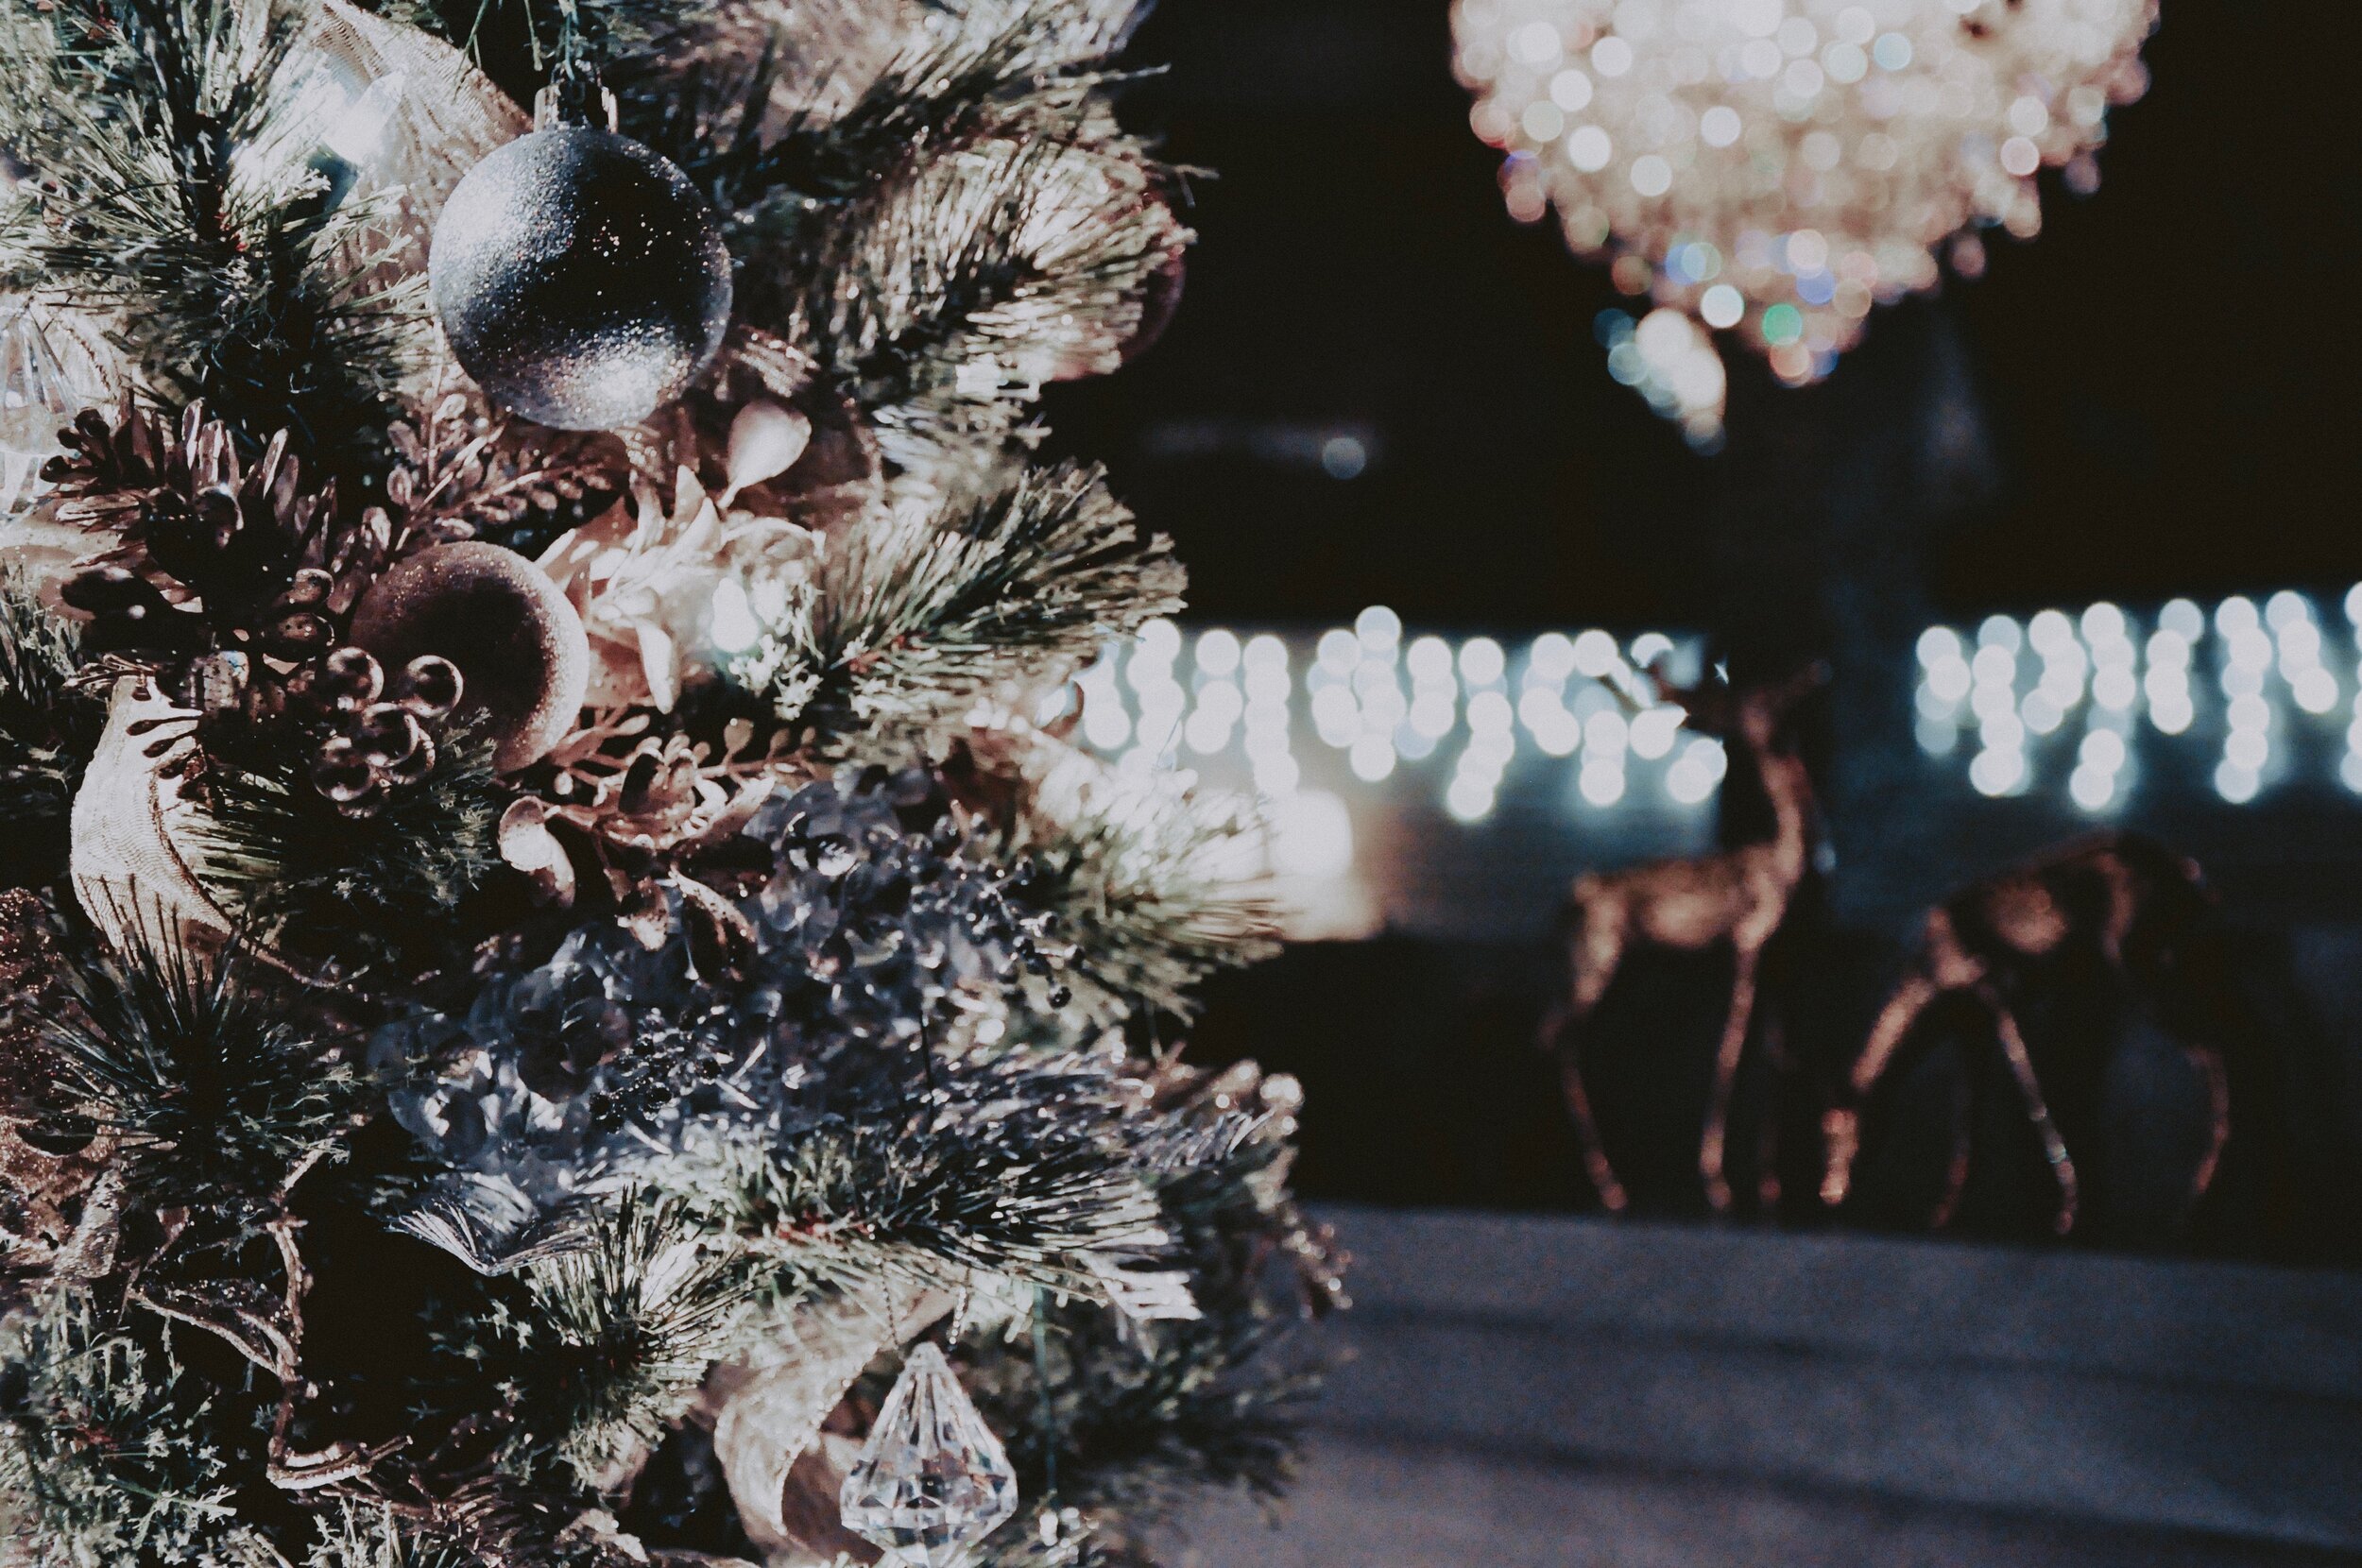 Brass Reindeer During Christmas Pic.JPG